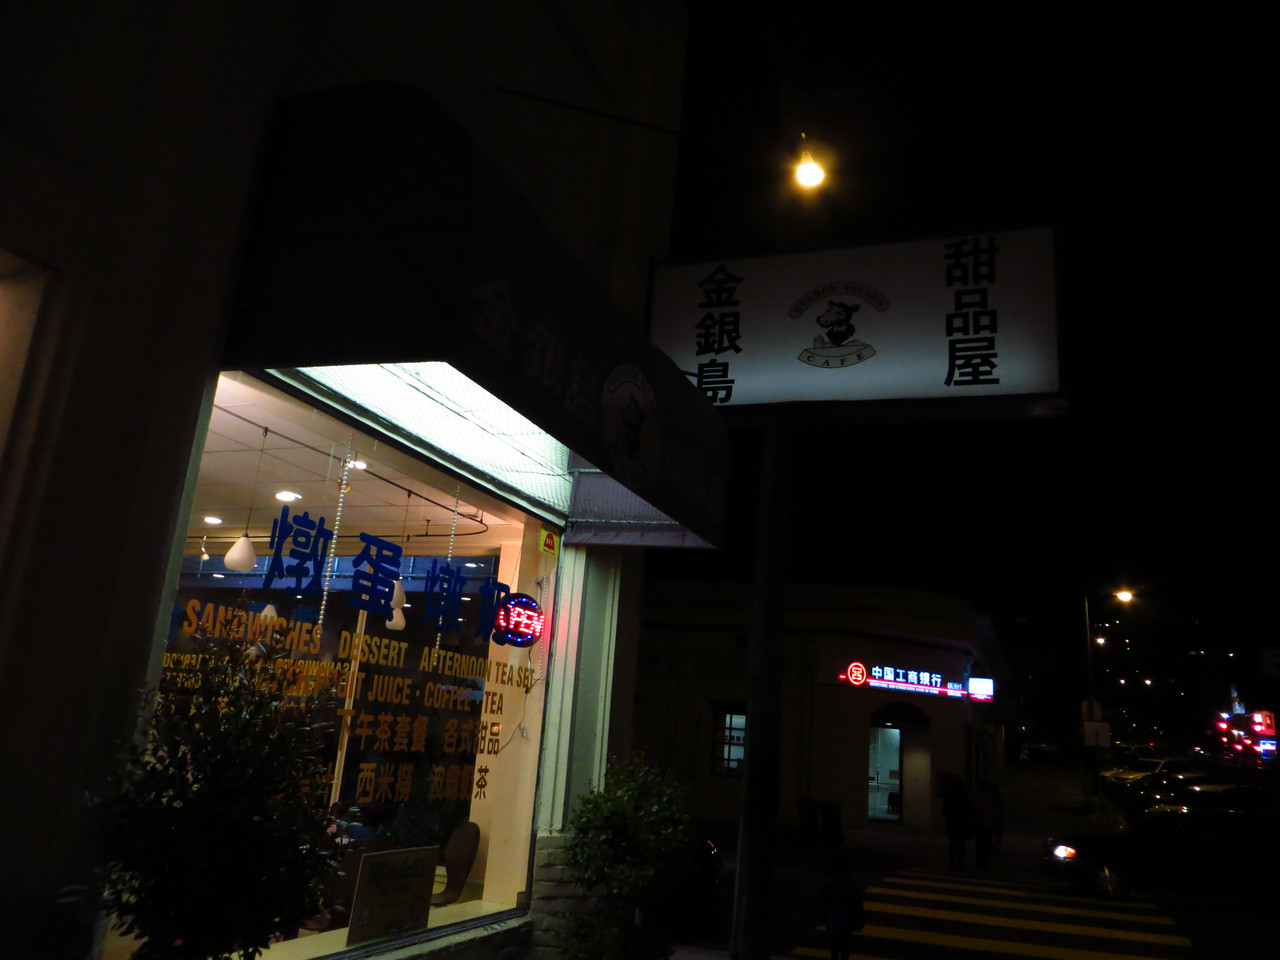 https://elsiehui.com/photos/golden_island_cafe_san_francisco_public_w1280_h960.JPG